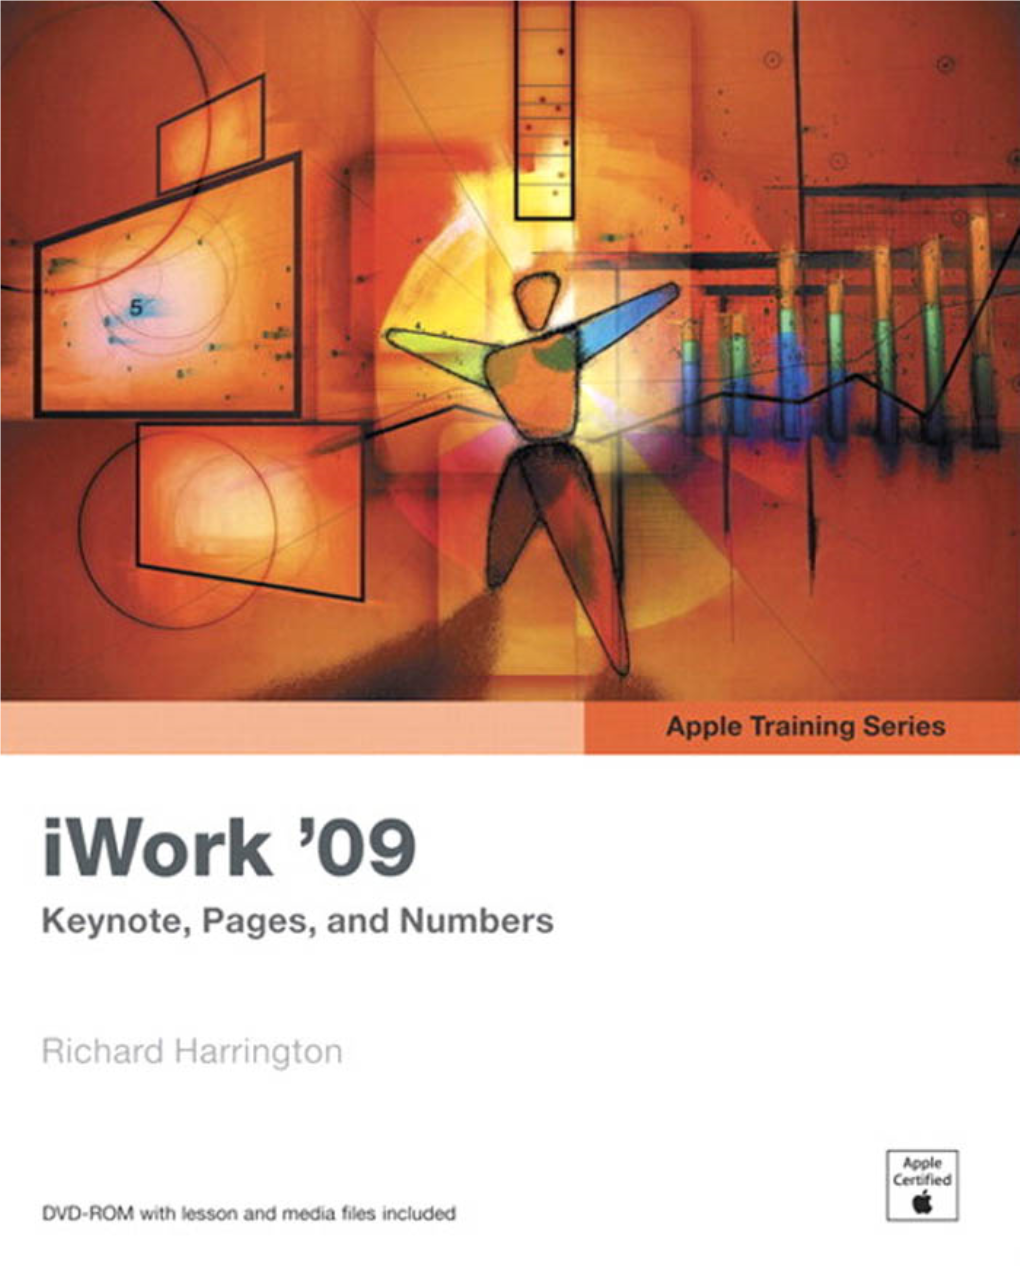 Apple Training Series Iwork ’09 Richard Harrington Apple Training Series: Iwork ’09 Richard Harrington Copyright © 2009 by Richard Harrington